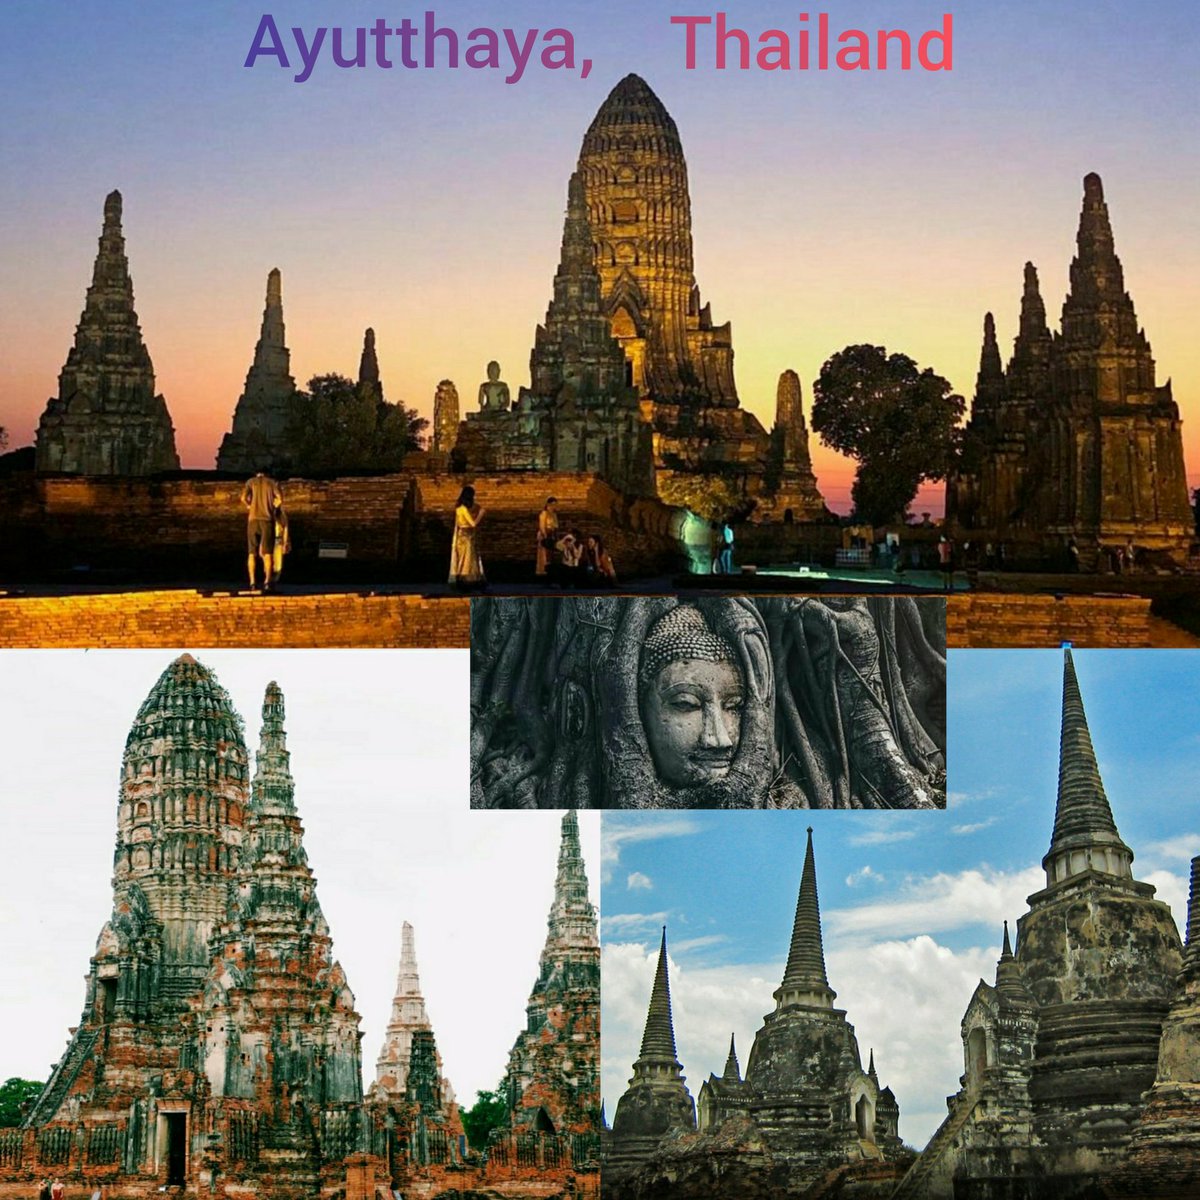 3) #Historic_City_of_Ayutthaya, Thailand, founded in 1350 CE, was the second capital of the Siamese Kingdom. The Thai city of Ayutthaya is named in honor of the original Ayodhya.  @Vyasonmukh  @ReclaimTemples  @AlpaChauhan_  @VedicWisdom1  @KshatriyaItihas #Aryavarta #Bharatvarsha